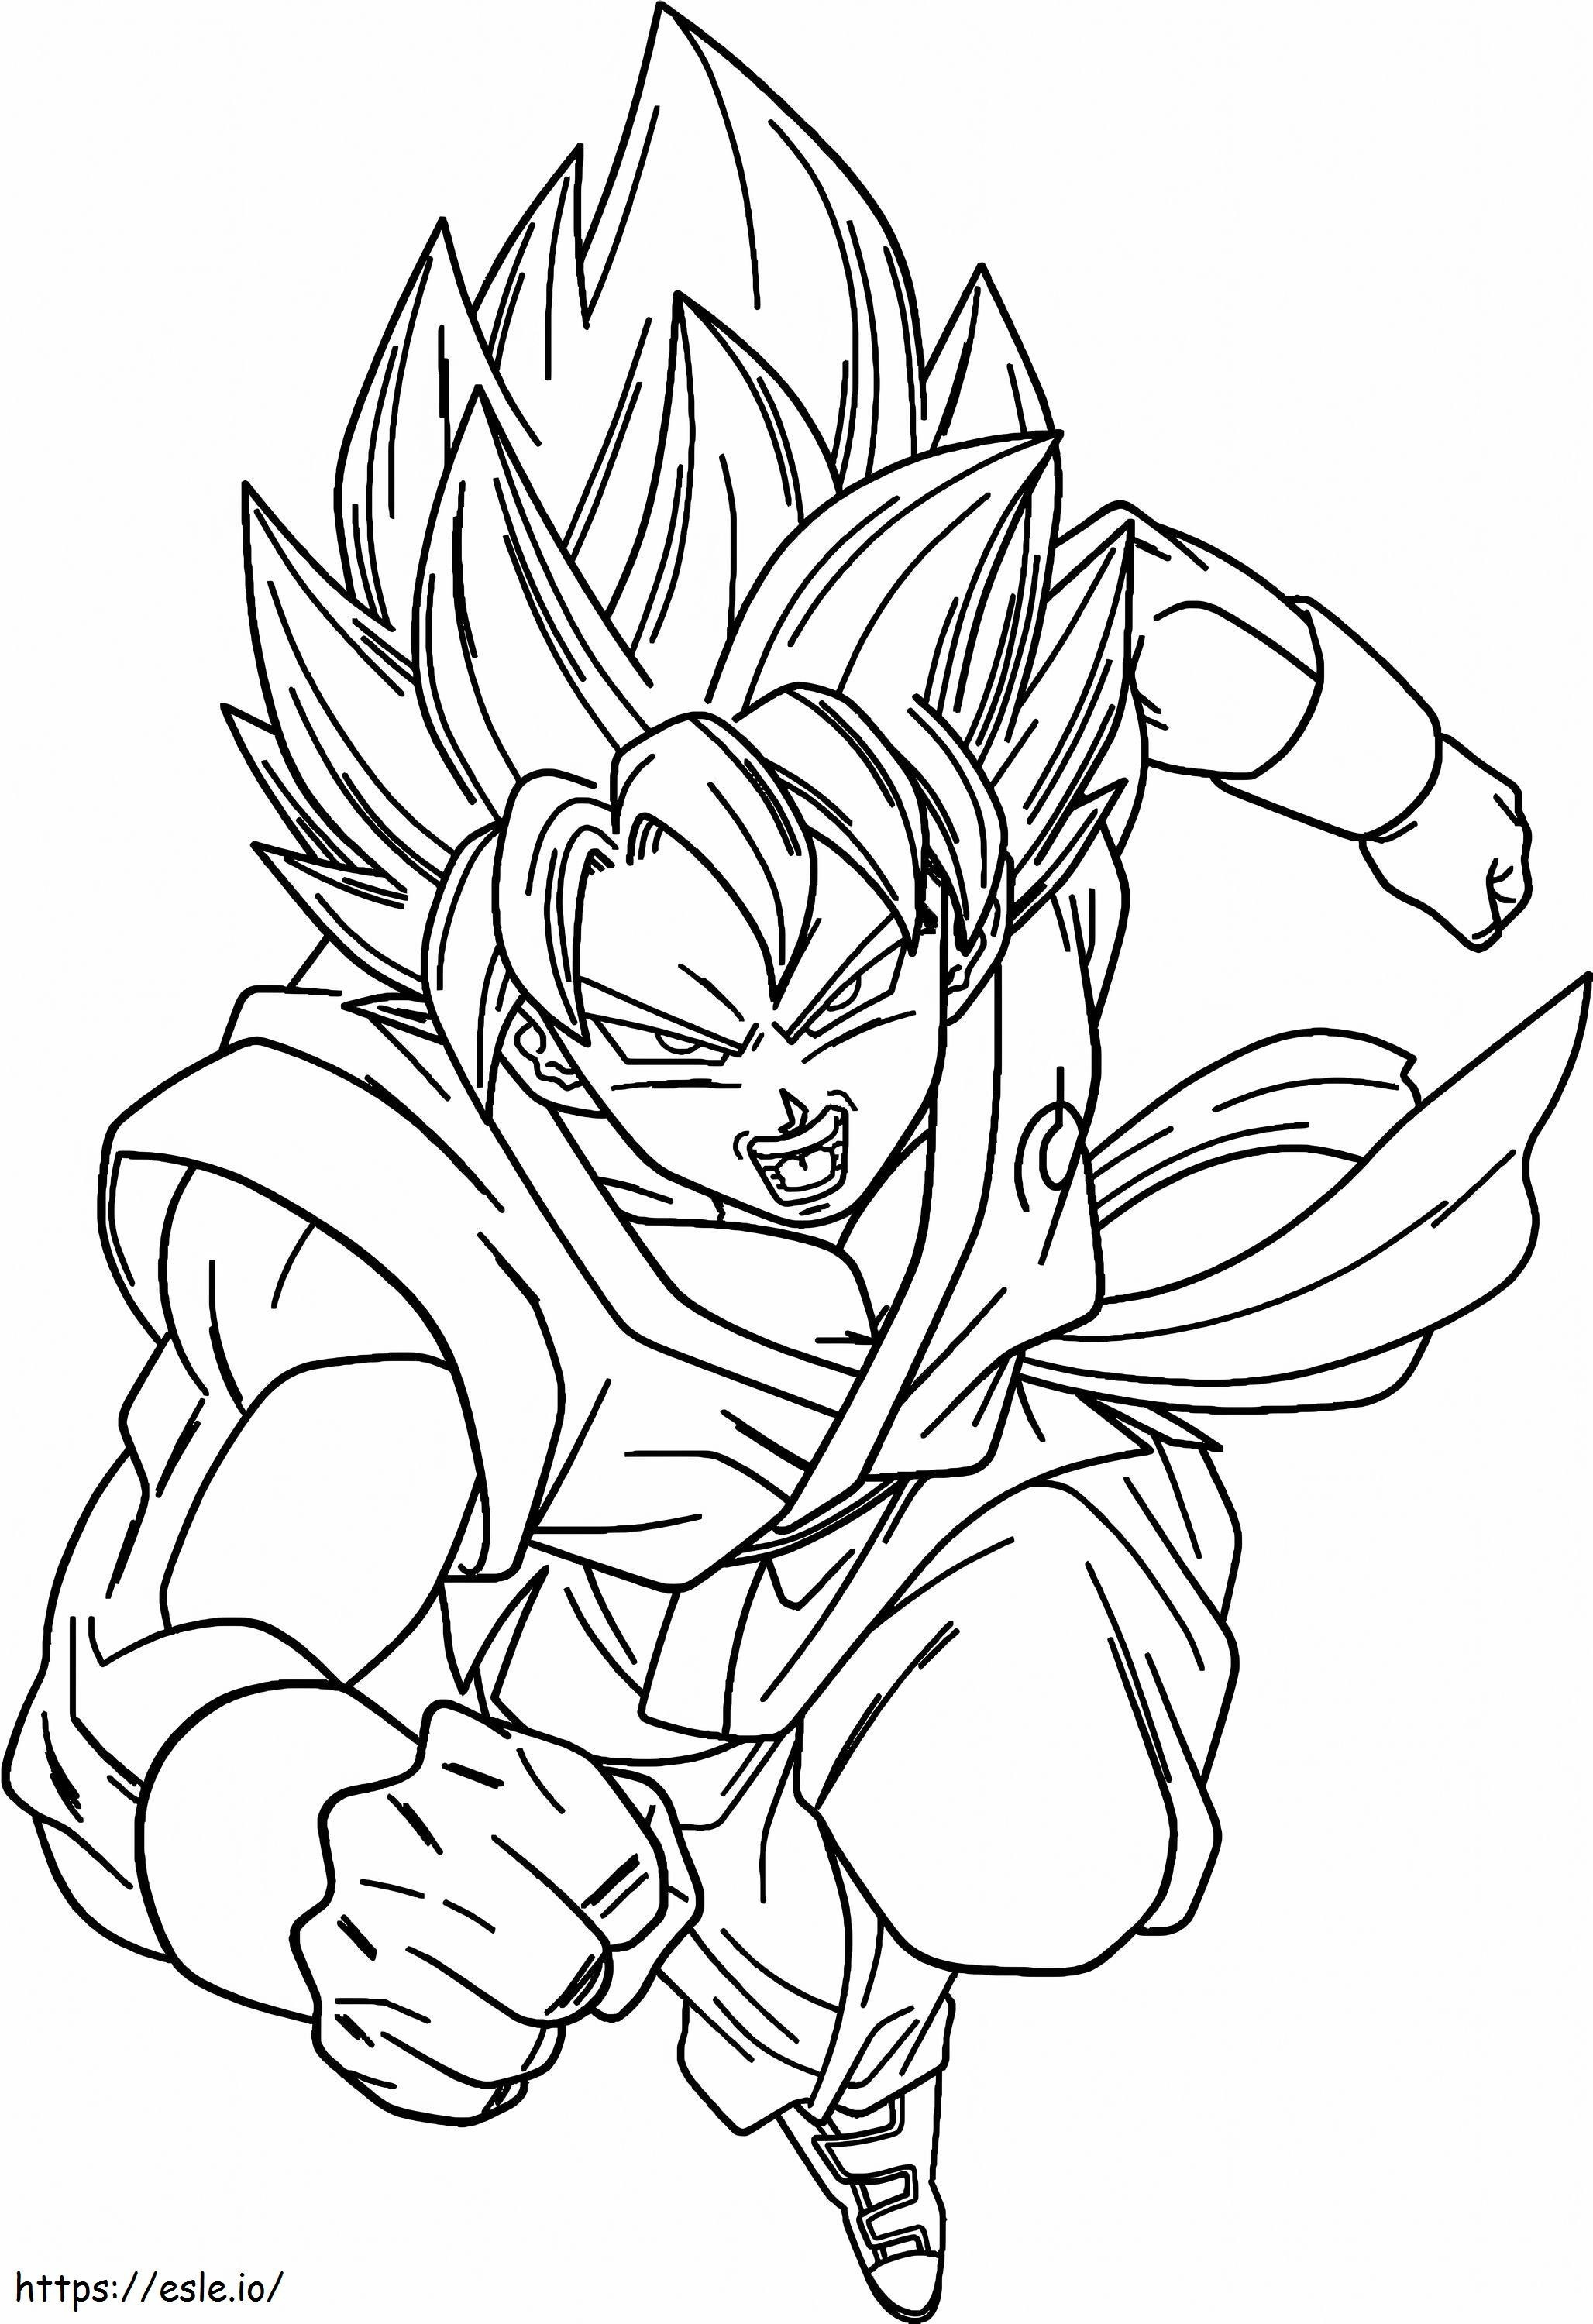 Fun Goku SSj1 Attack coloring page